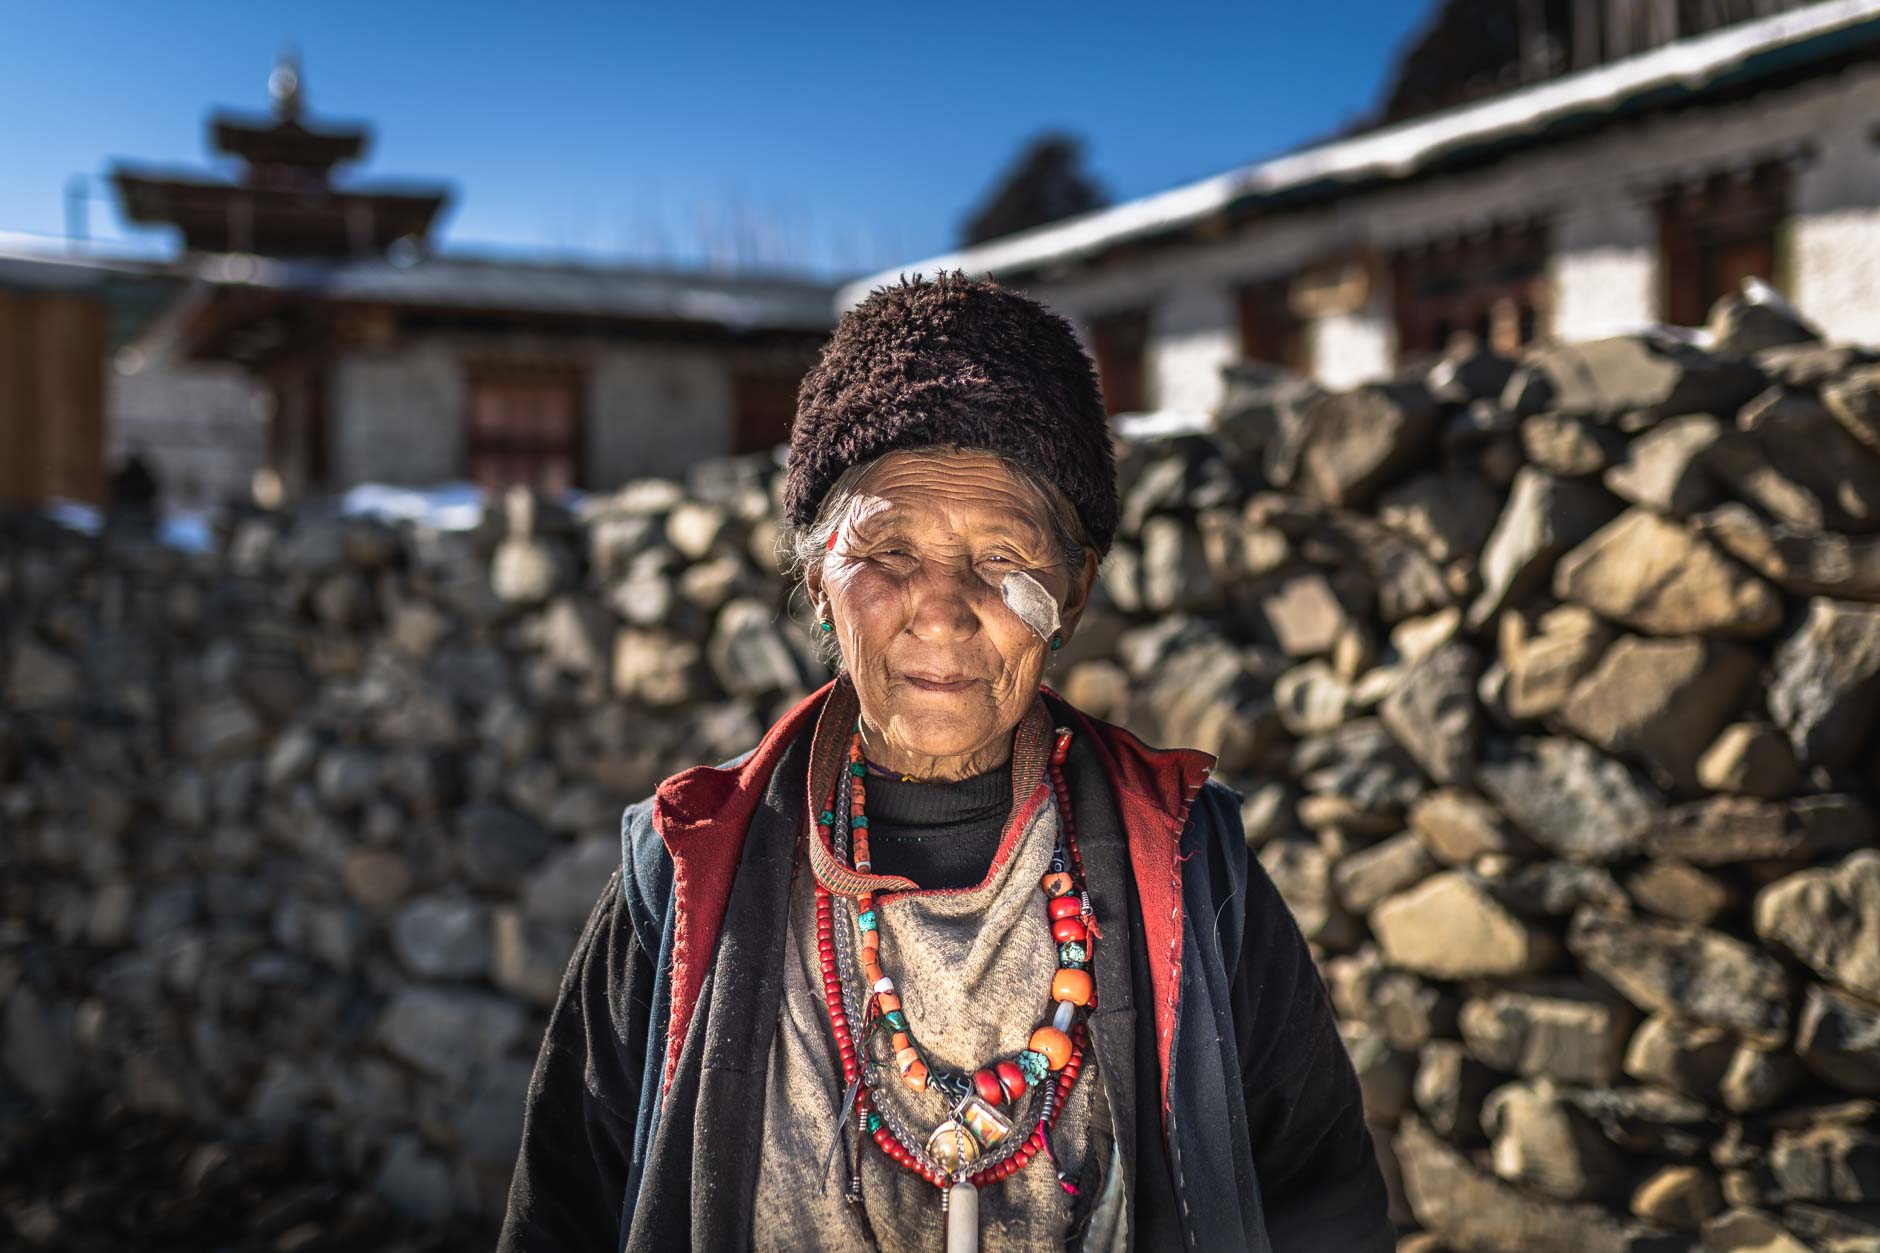 Portrait photography of an elderly tribeswoman in the village of Merak, Bhutan